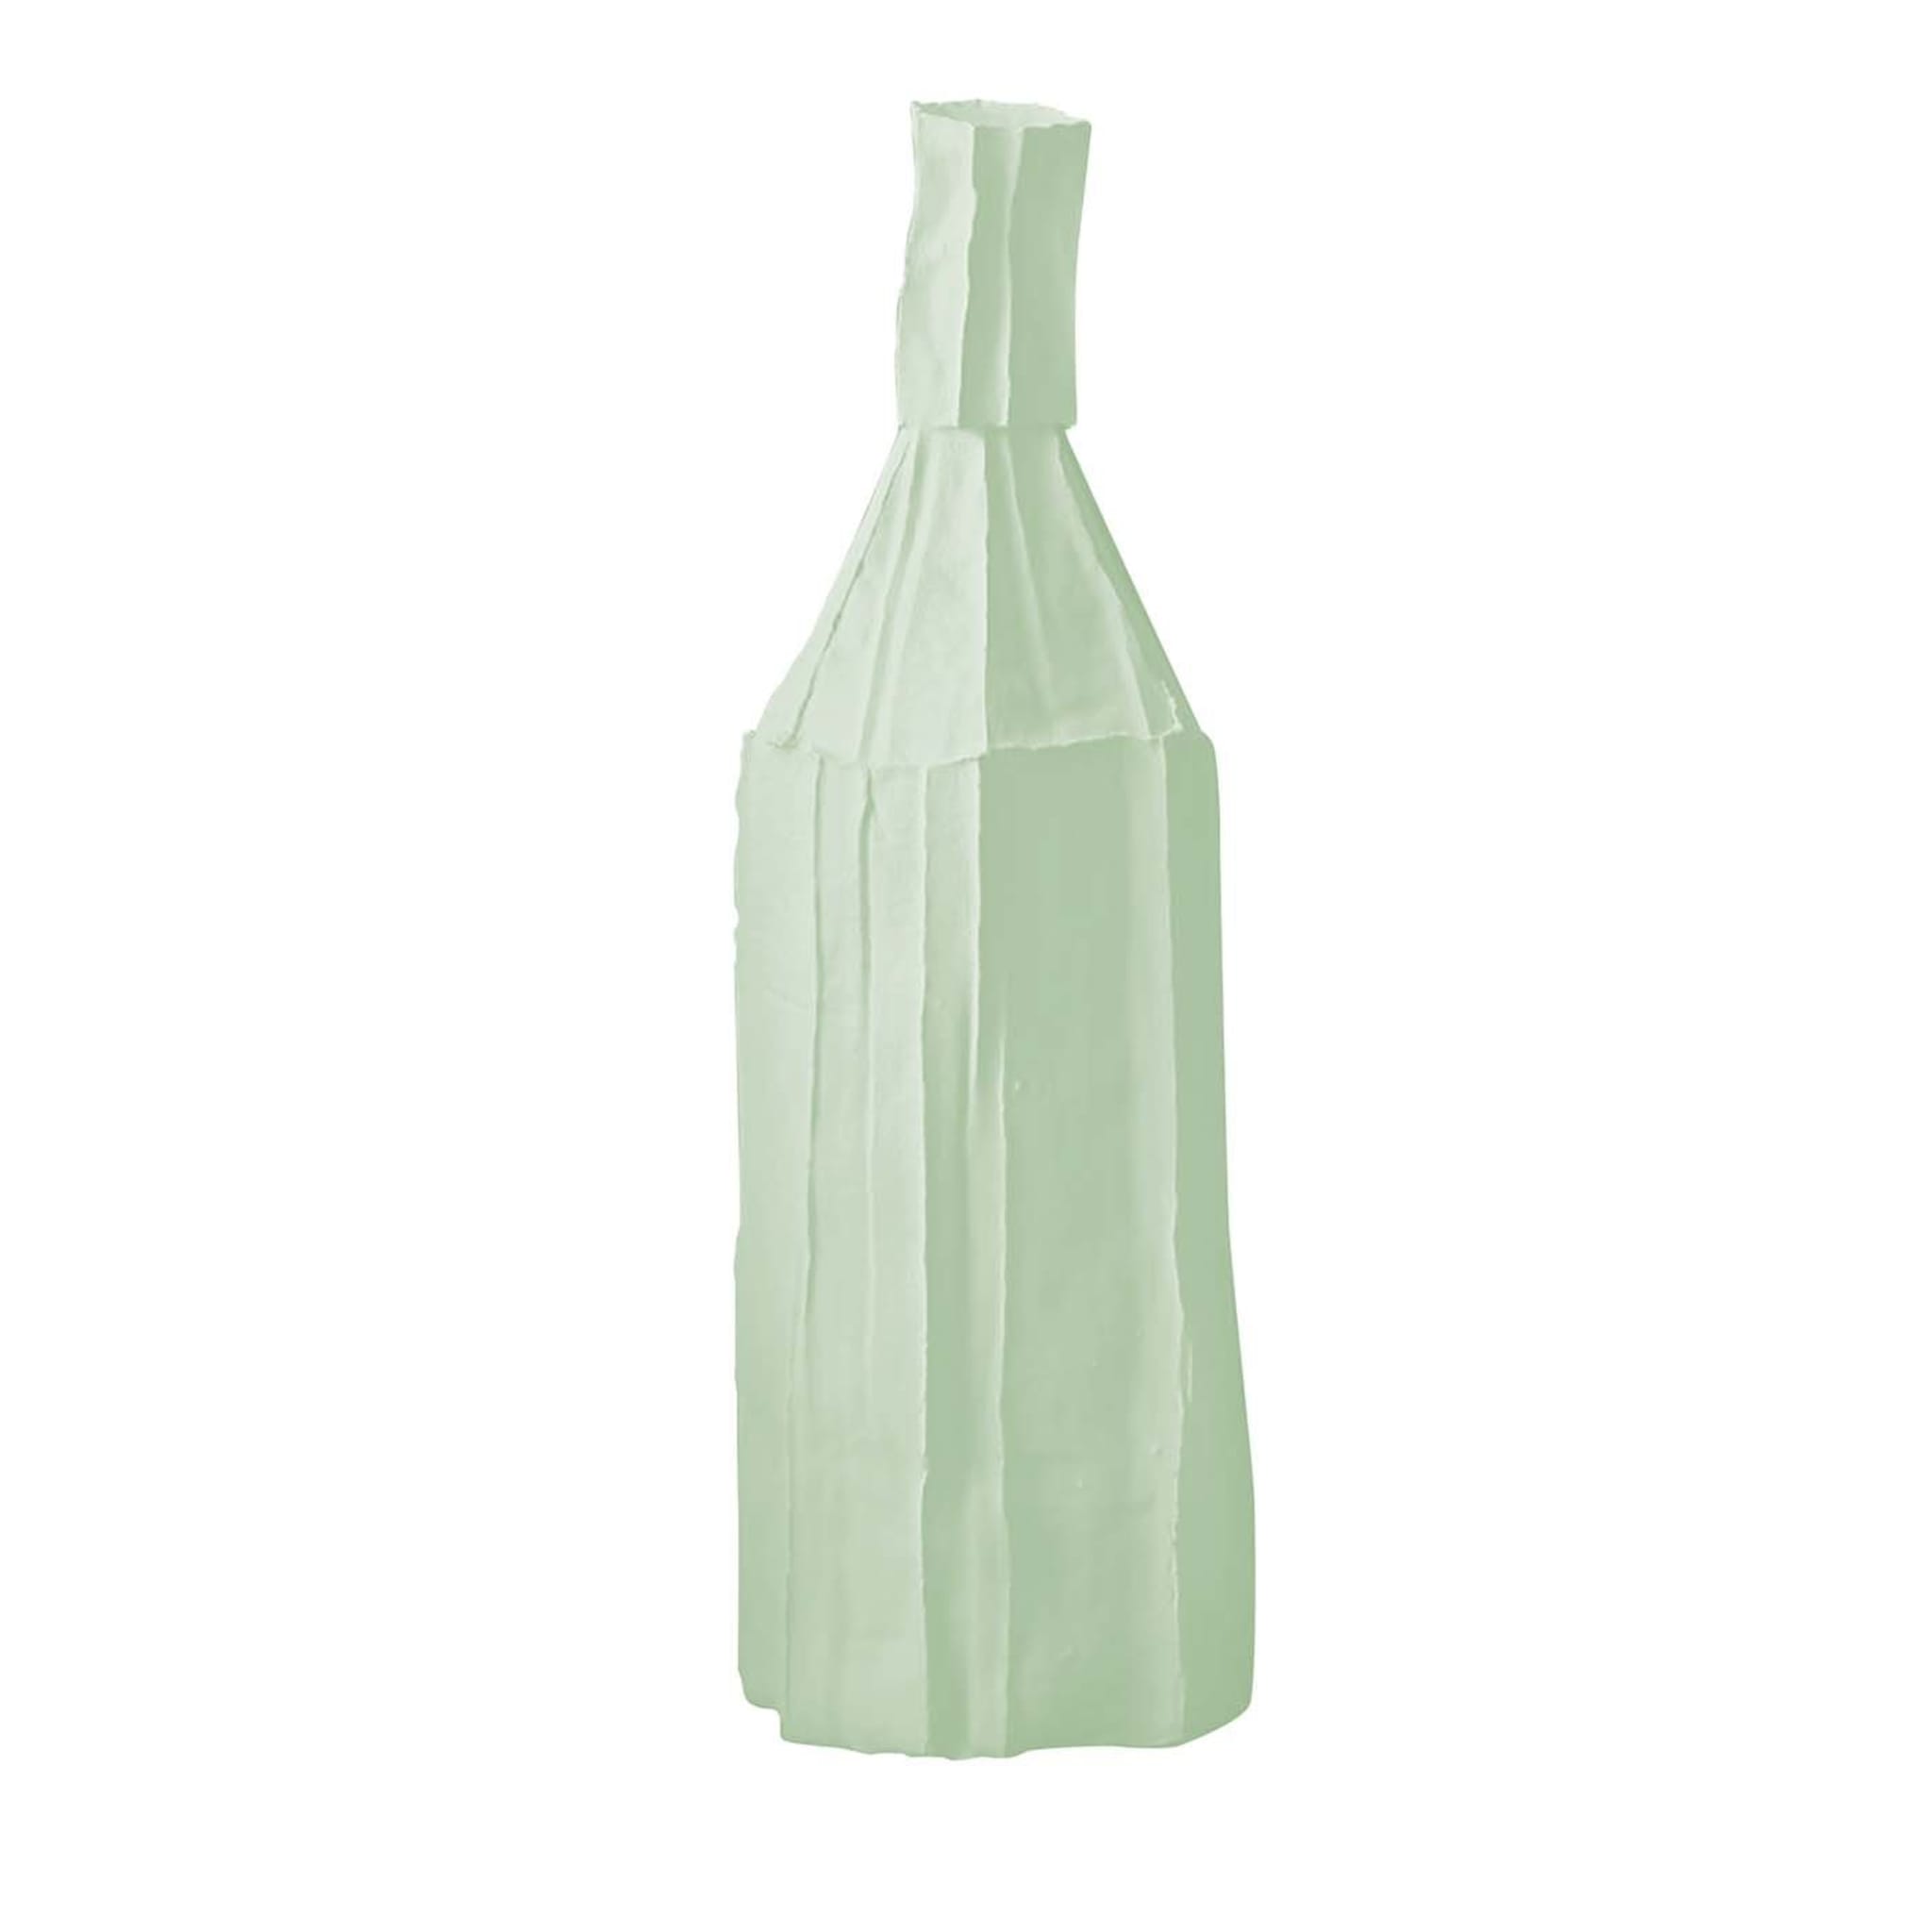 Cartocci Light Mint Green Decorative Bottle - Main view